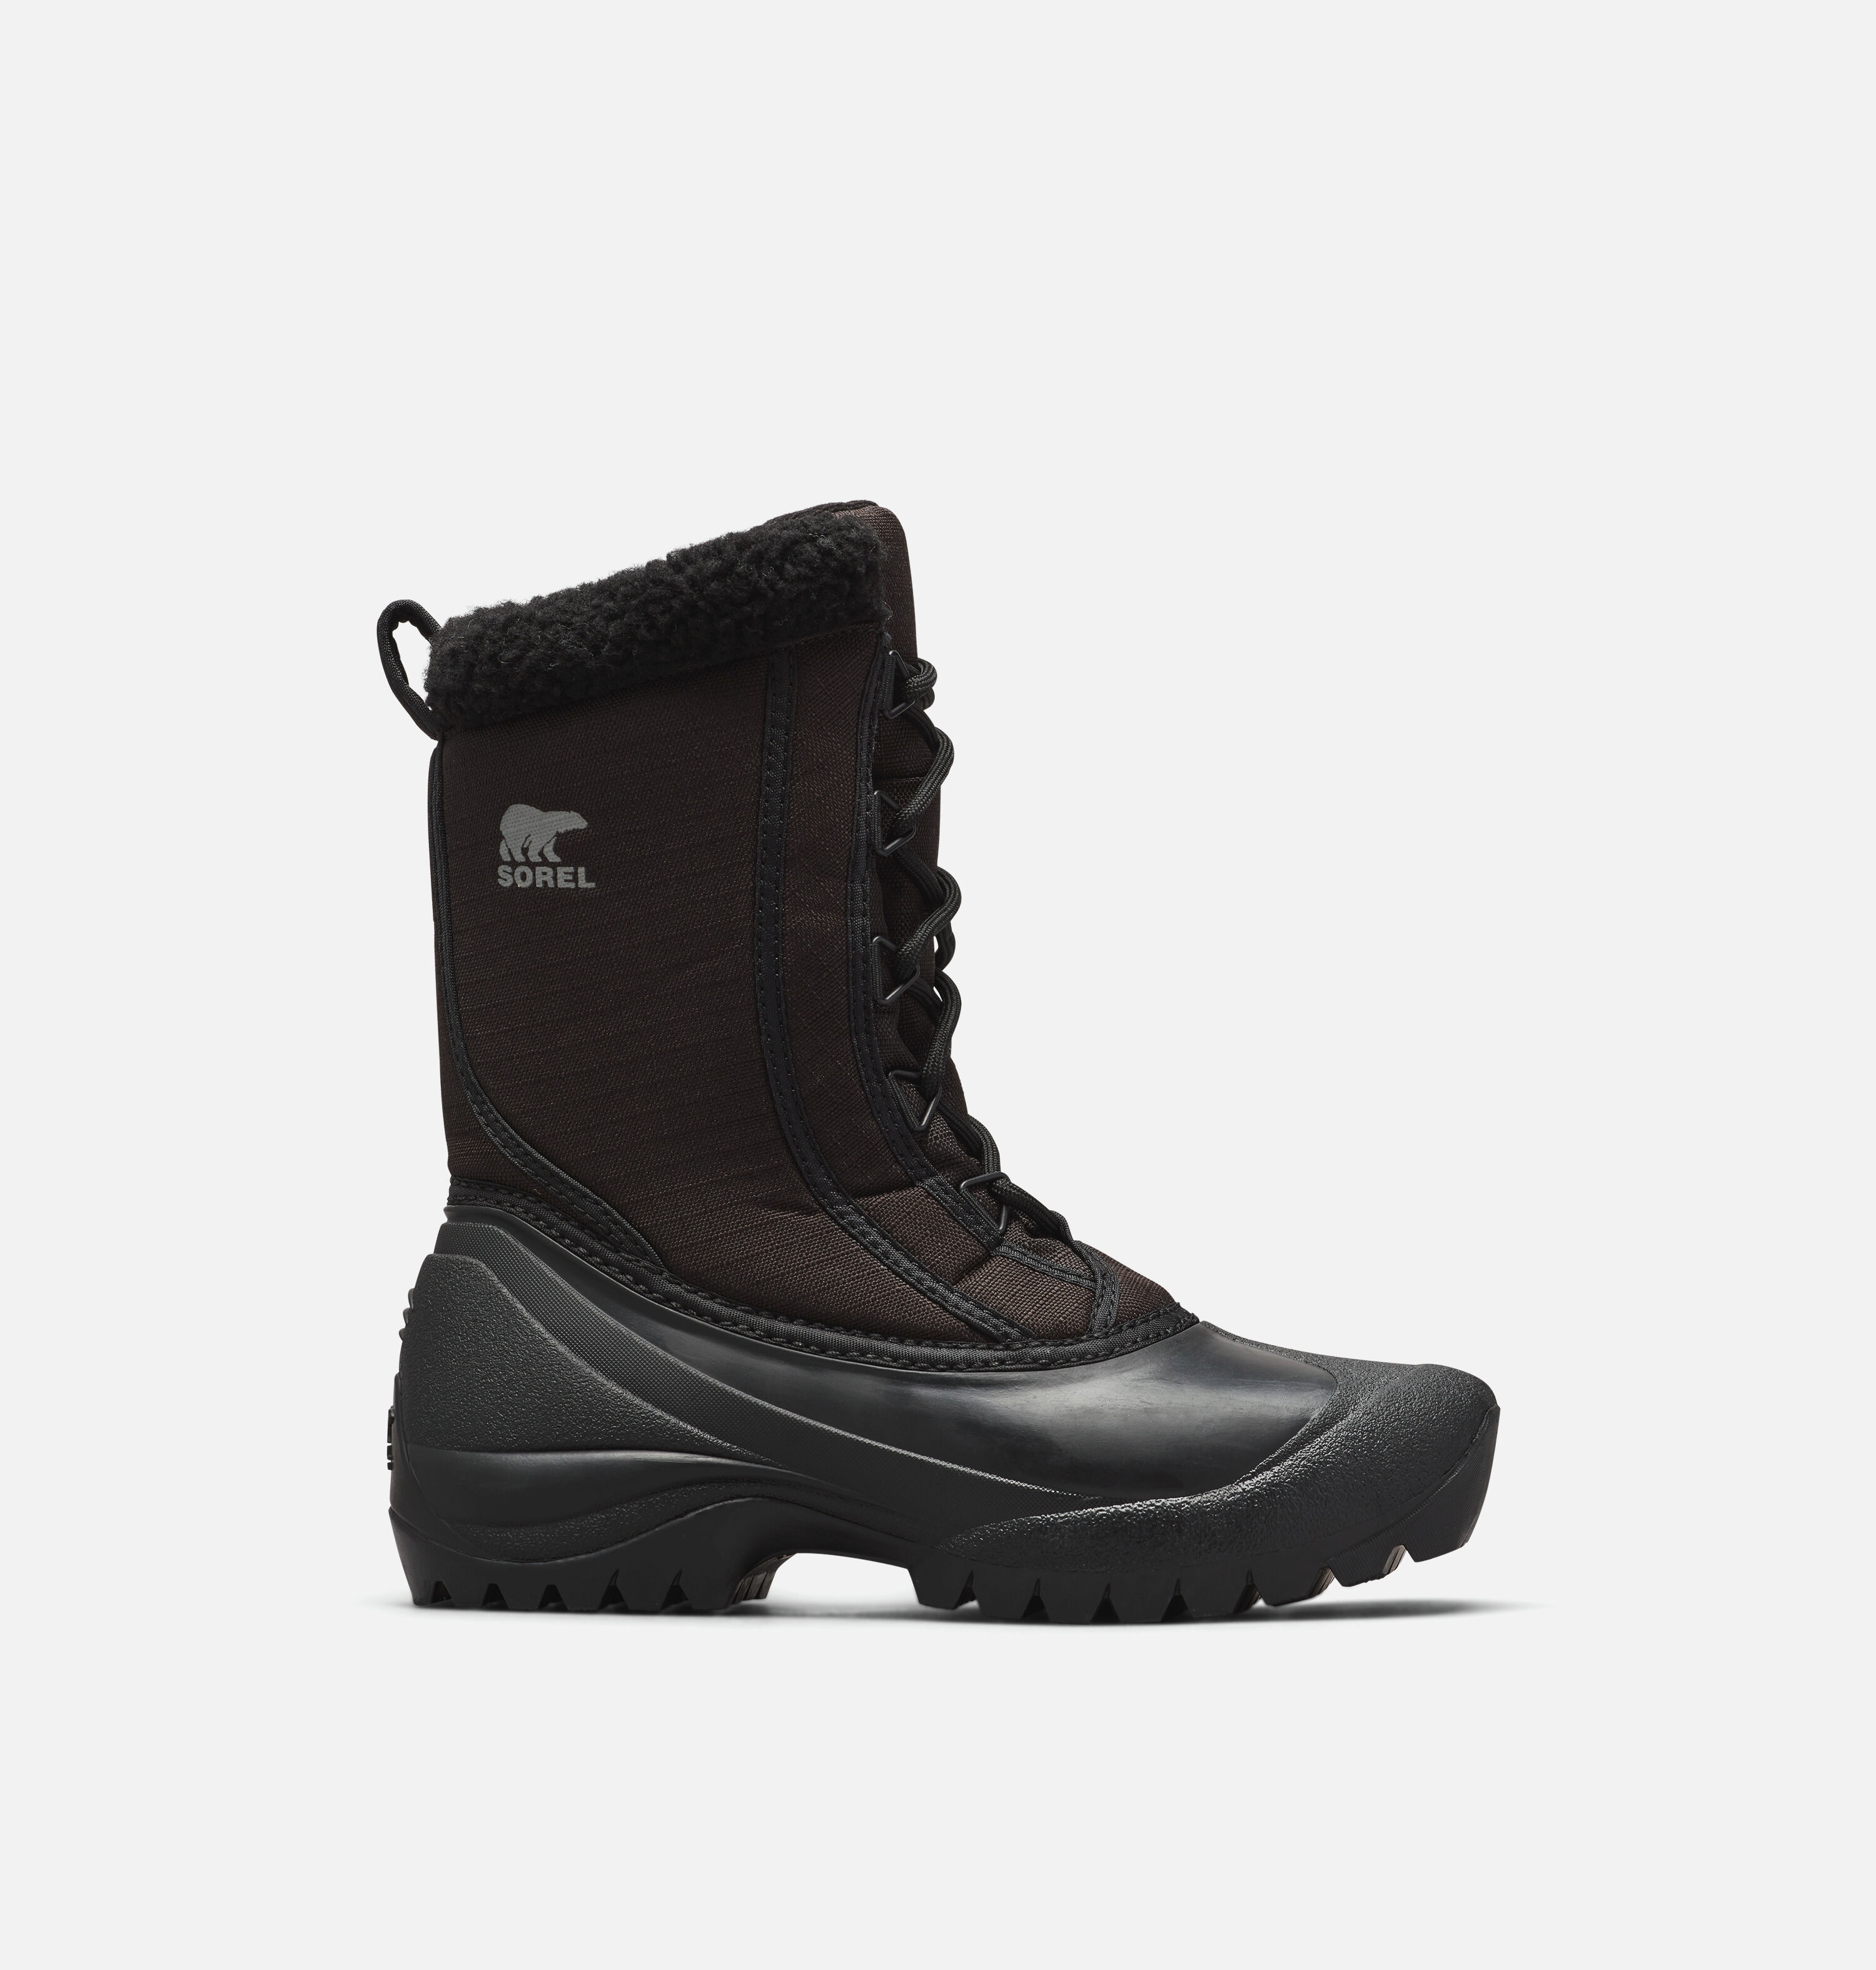 Sorel Cumberland - Winter Boots - Damen